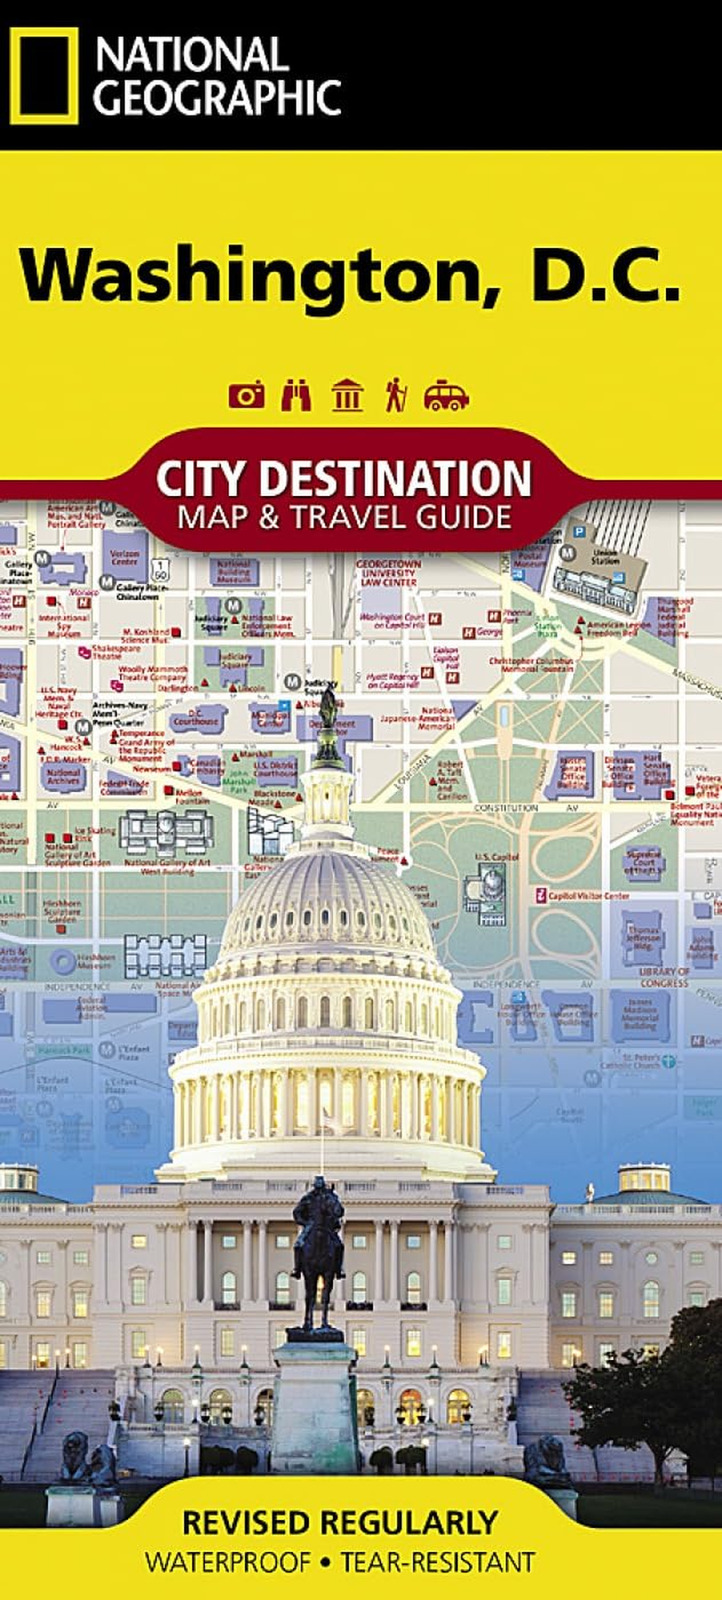 Washington D.C. Map (National Geographic Destination City Map) - NEW